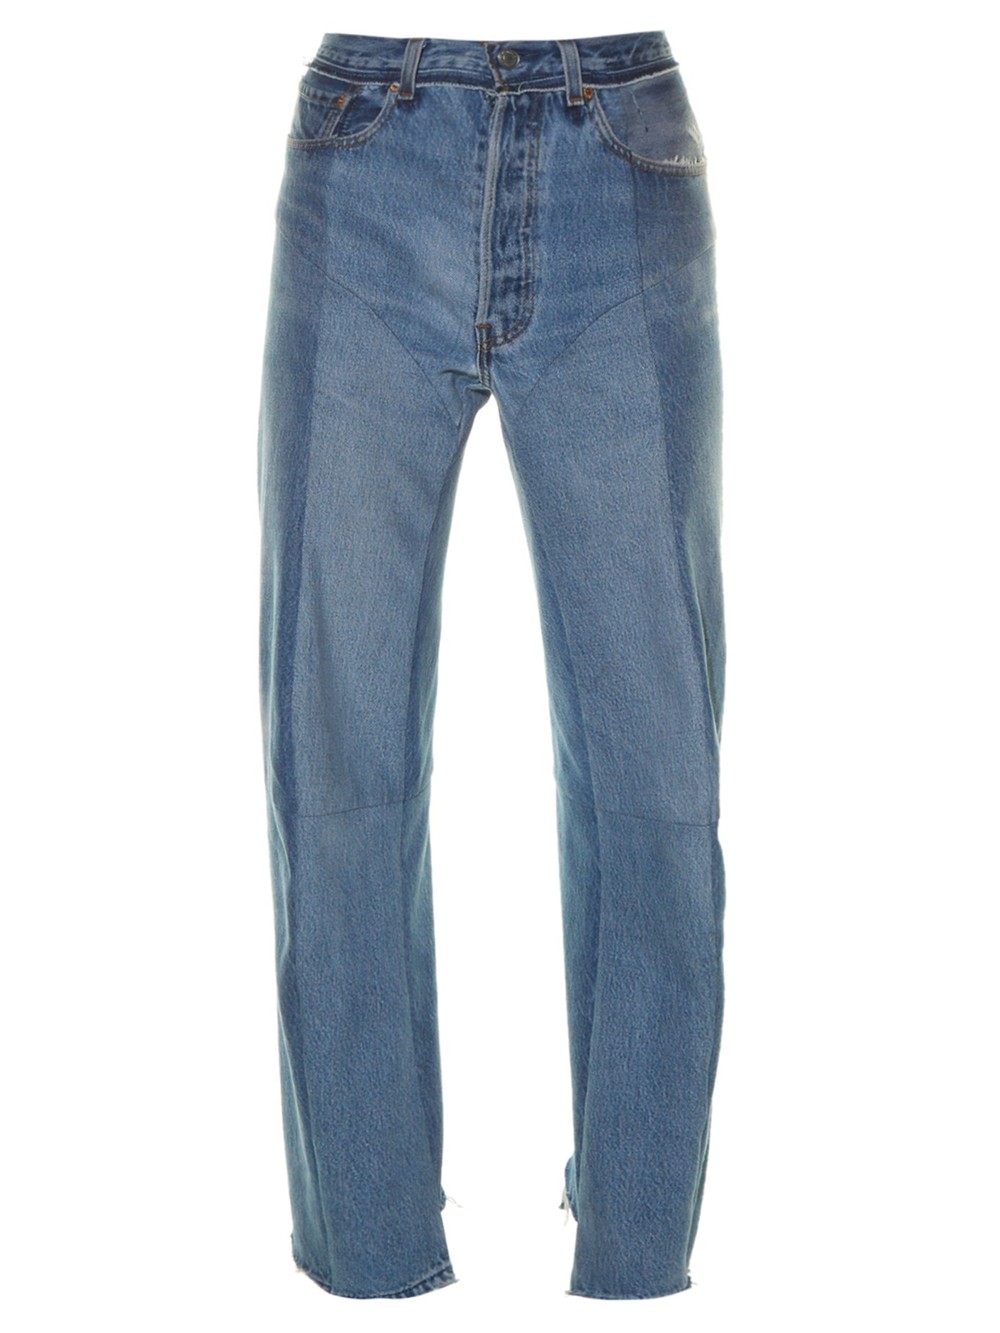 Vetements jeans.jpg